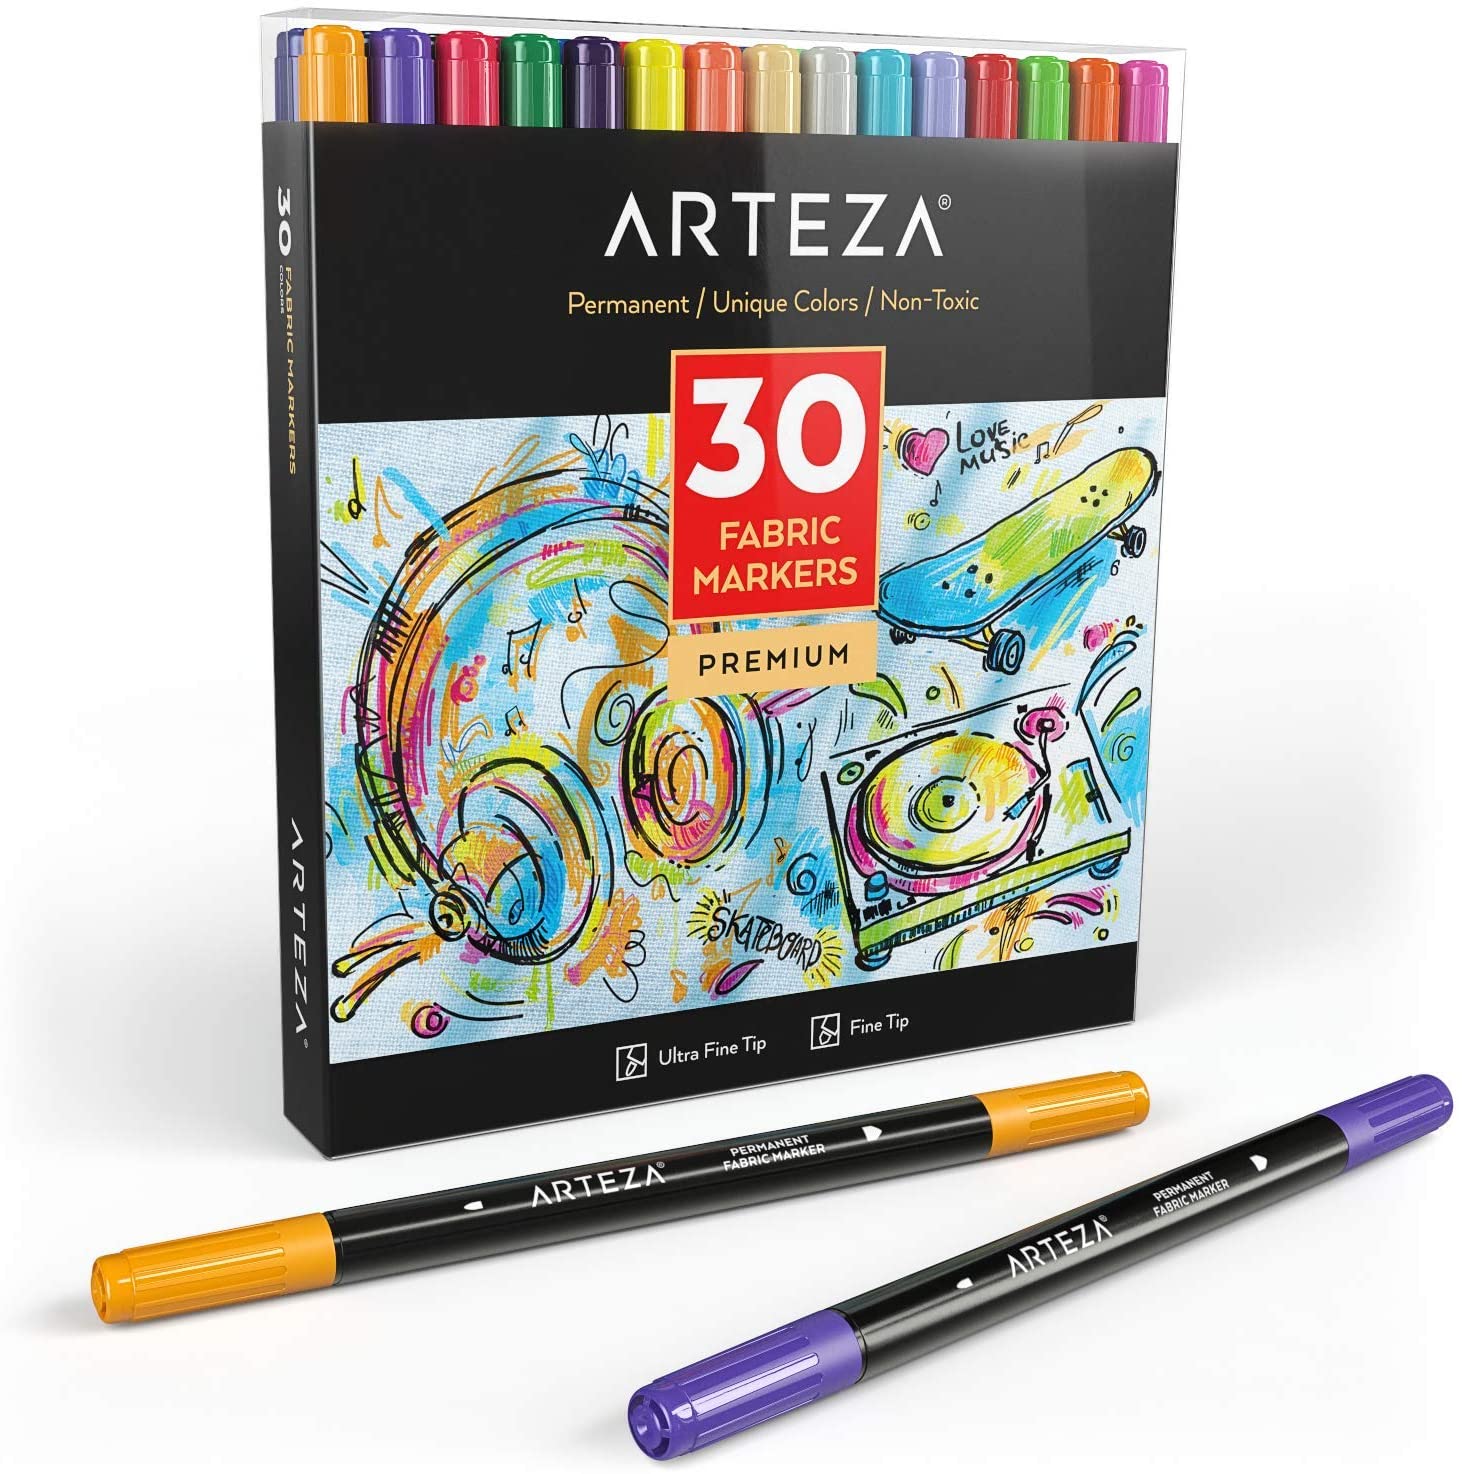 ARTEZA Fabric Markers